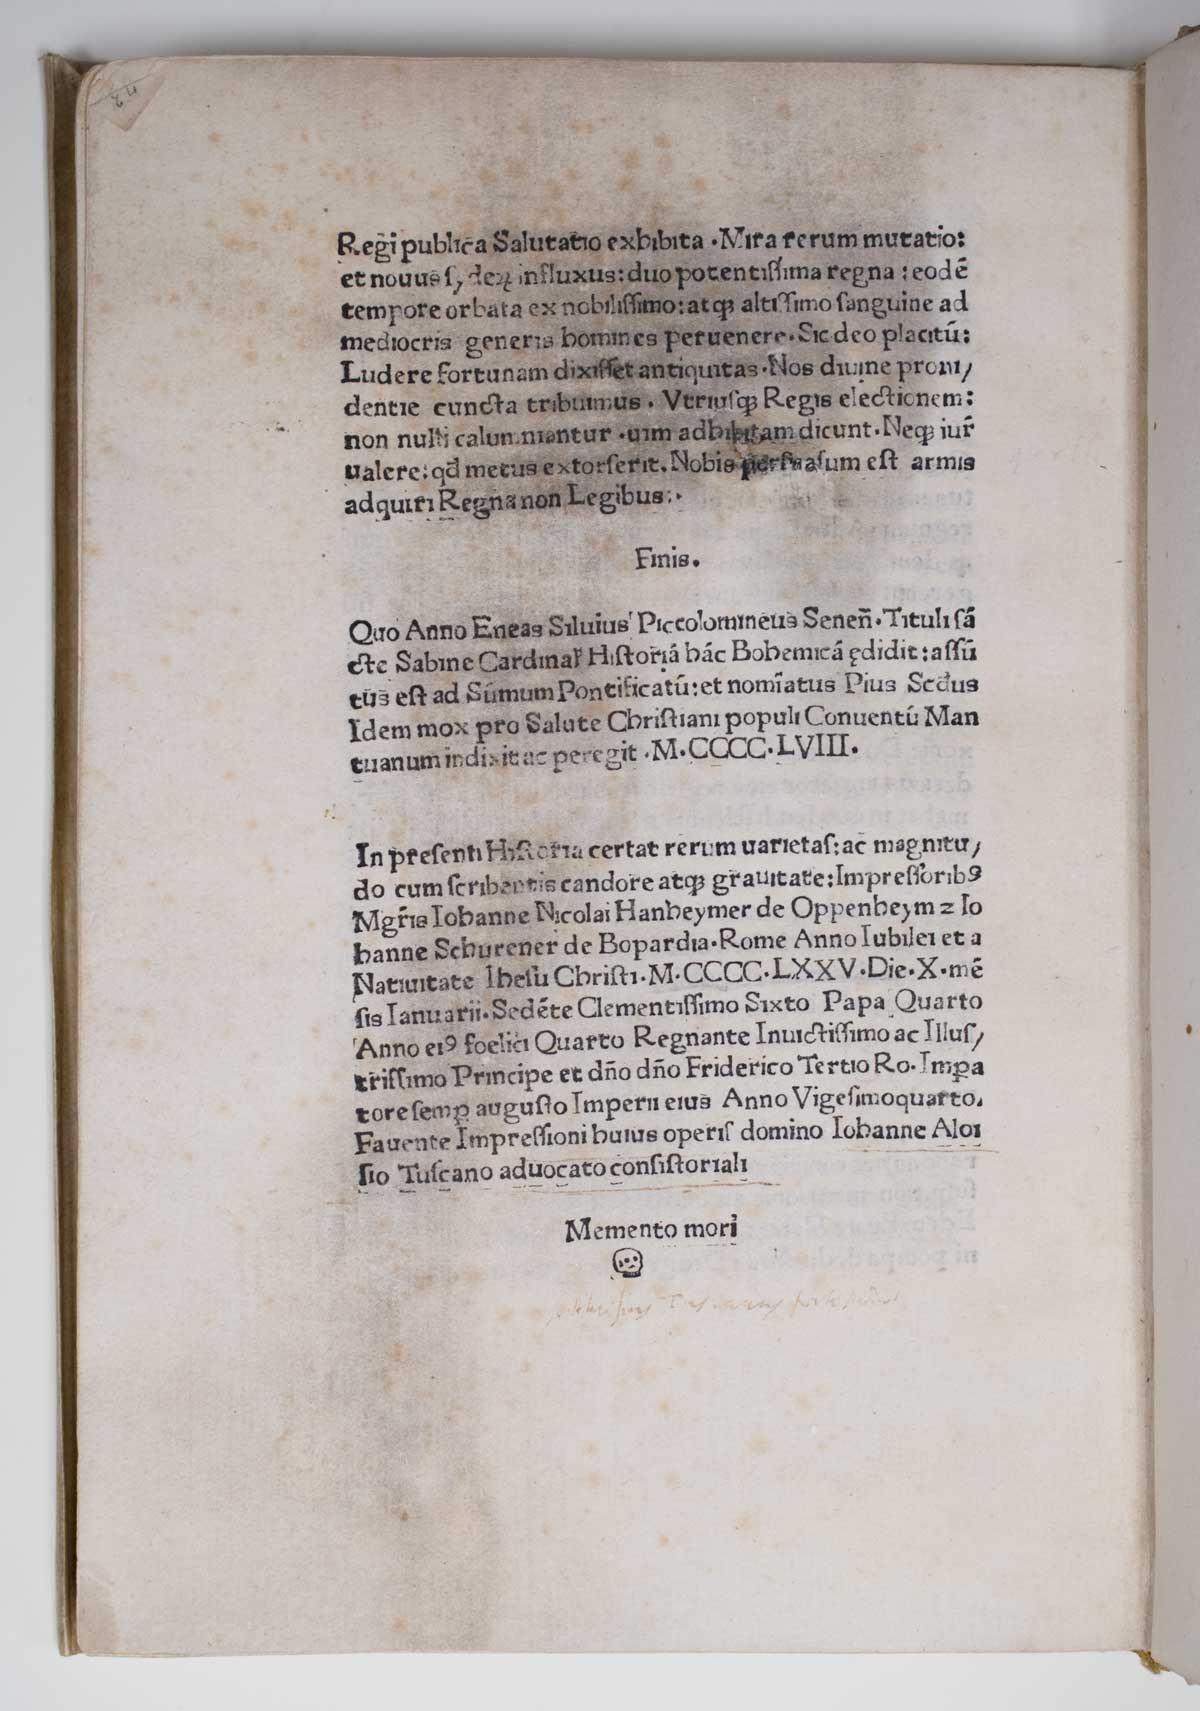 Pope Pius II, Historia Bohemica (Rome: J. N. Hanheymer and J. Schurener, 1475), fol. 73 verso. Harry Ransom Center, Incun 1475 P688h.